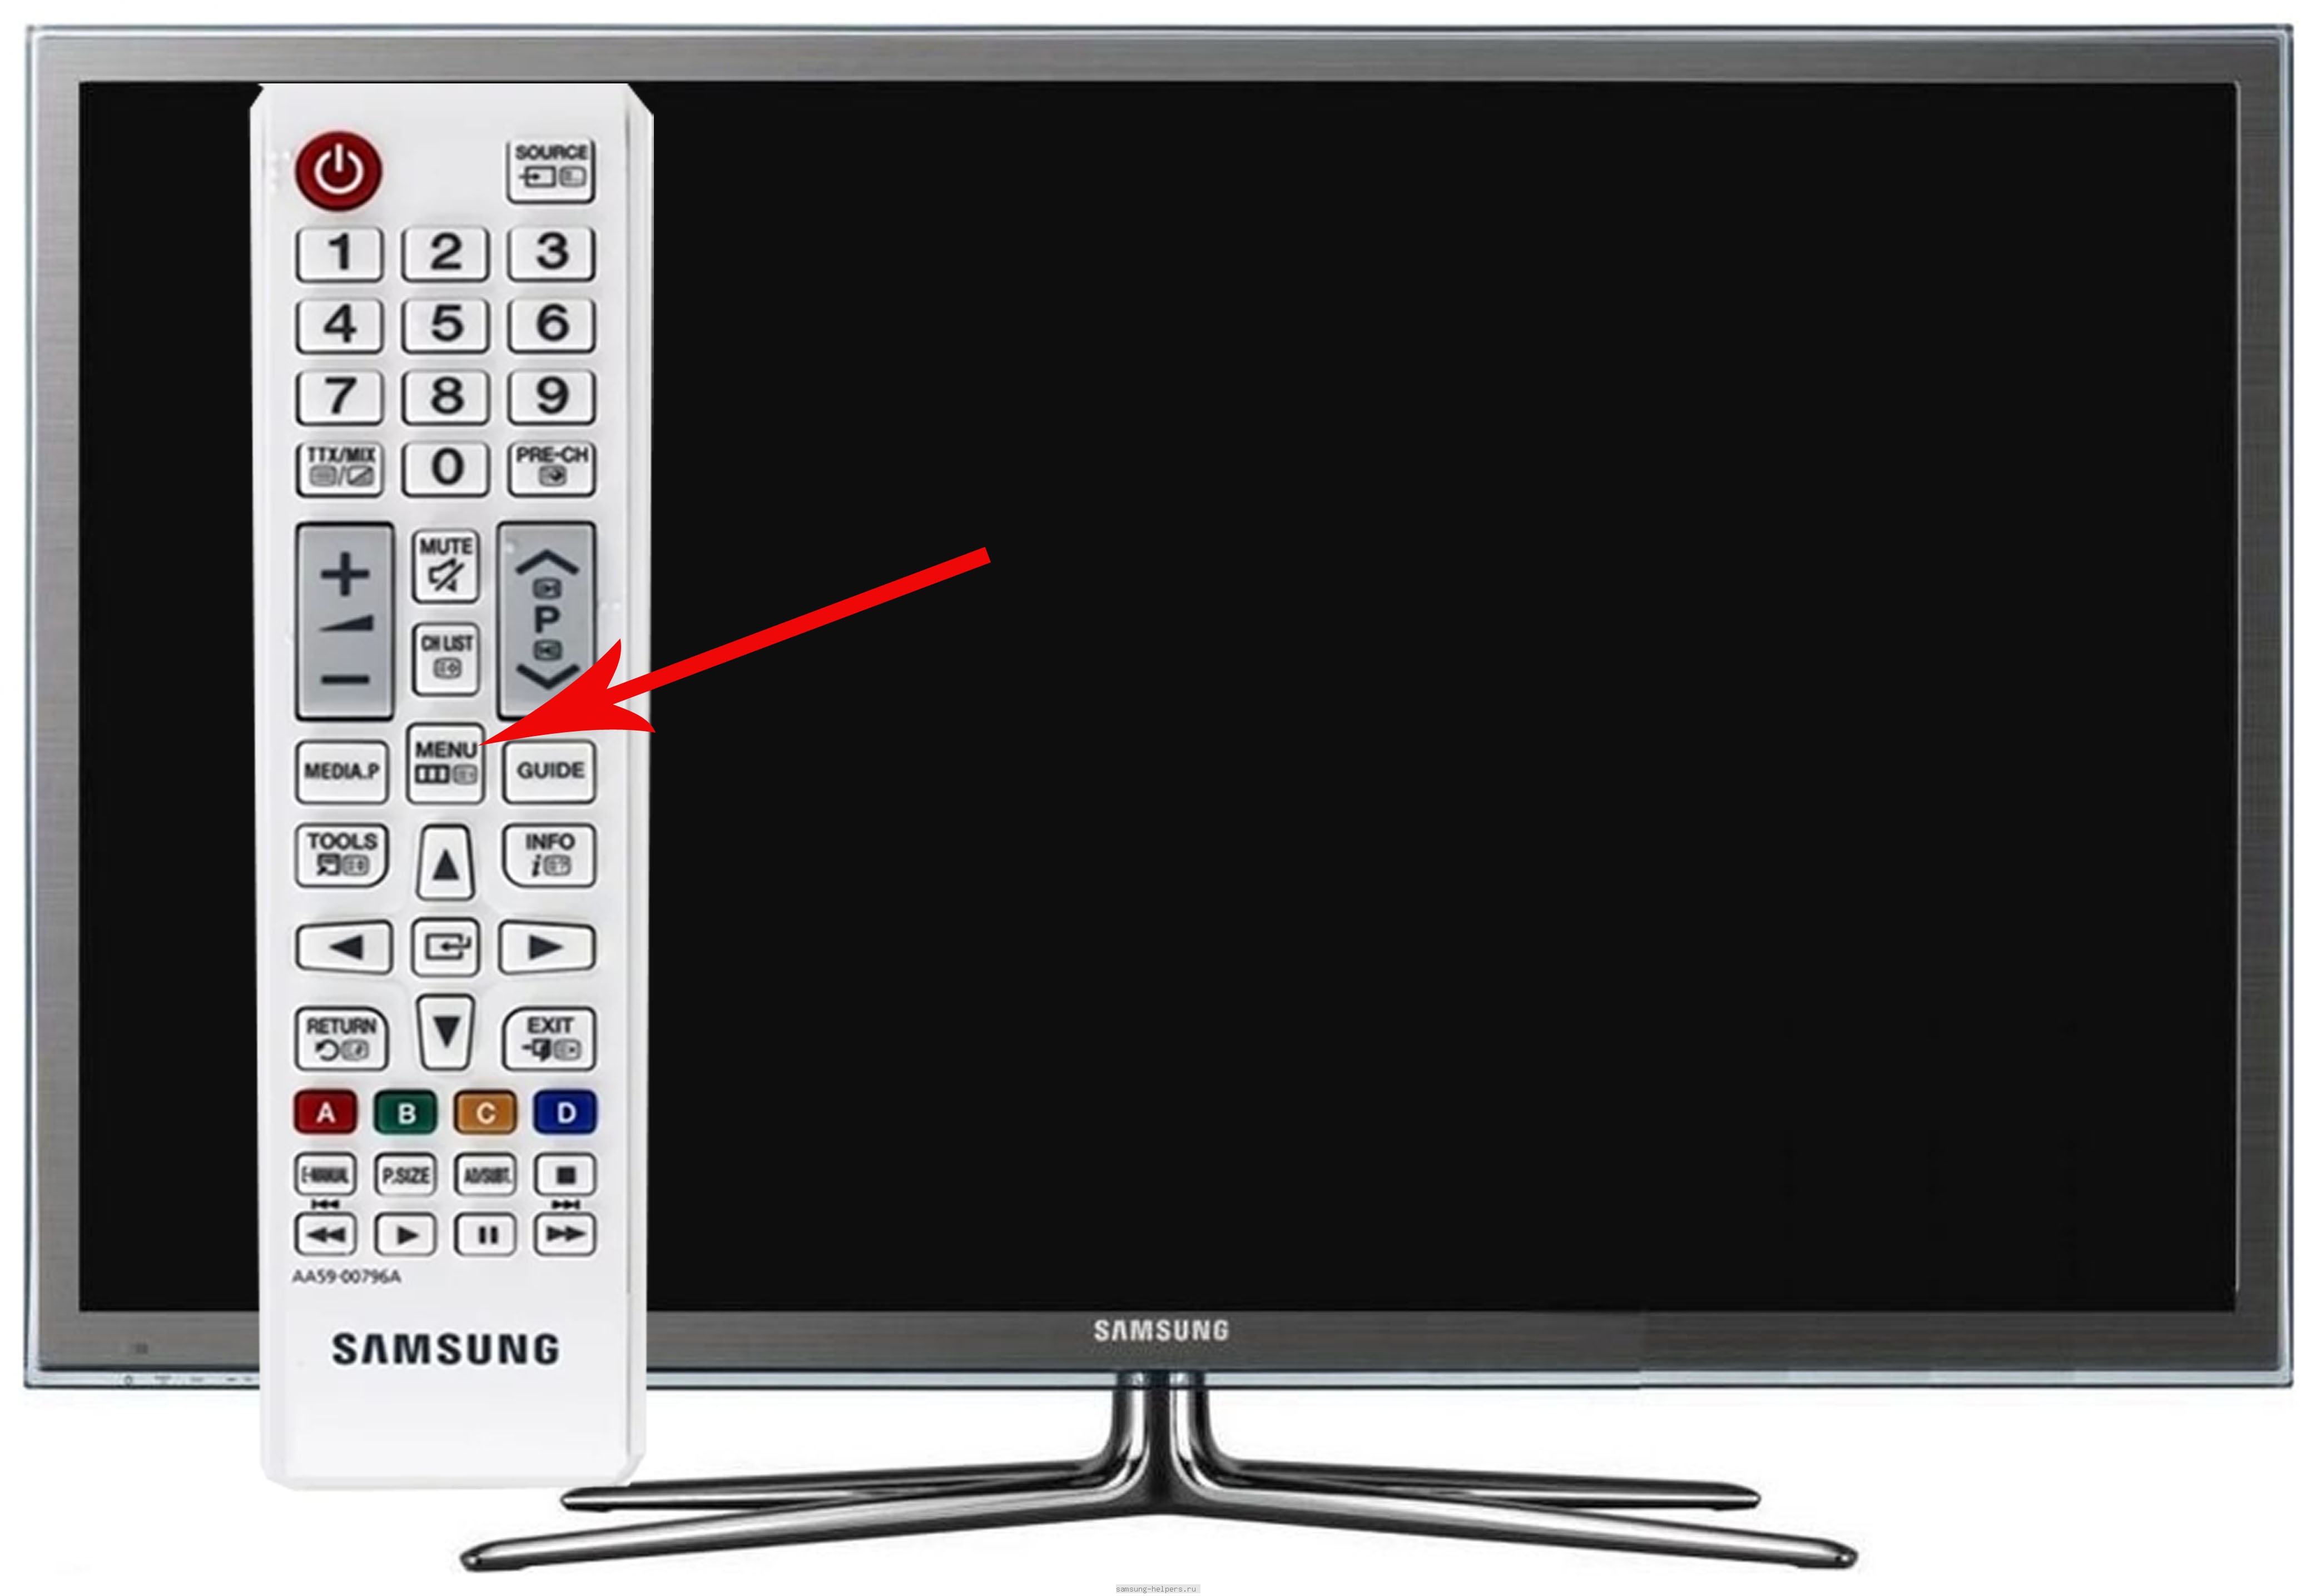 Пин Код Телевизора Samsung Smart